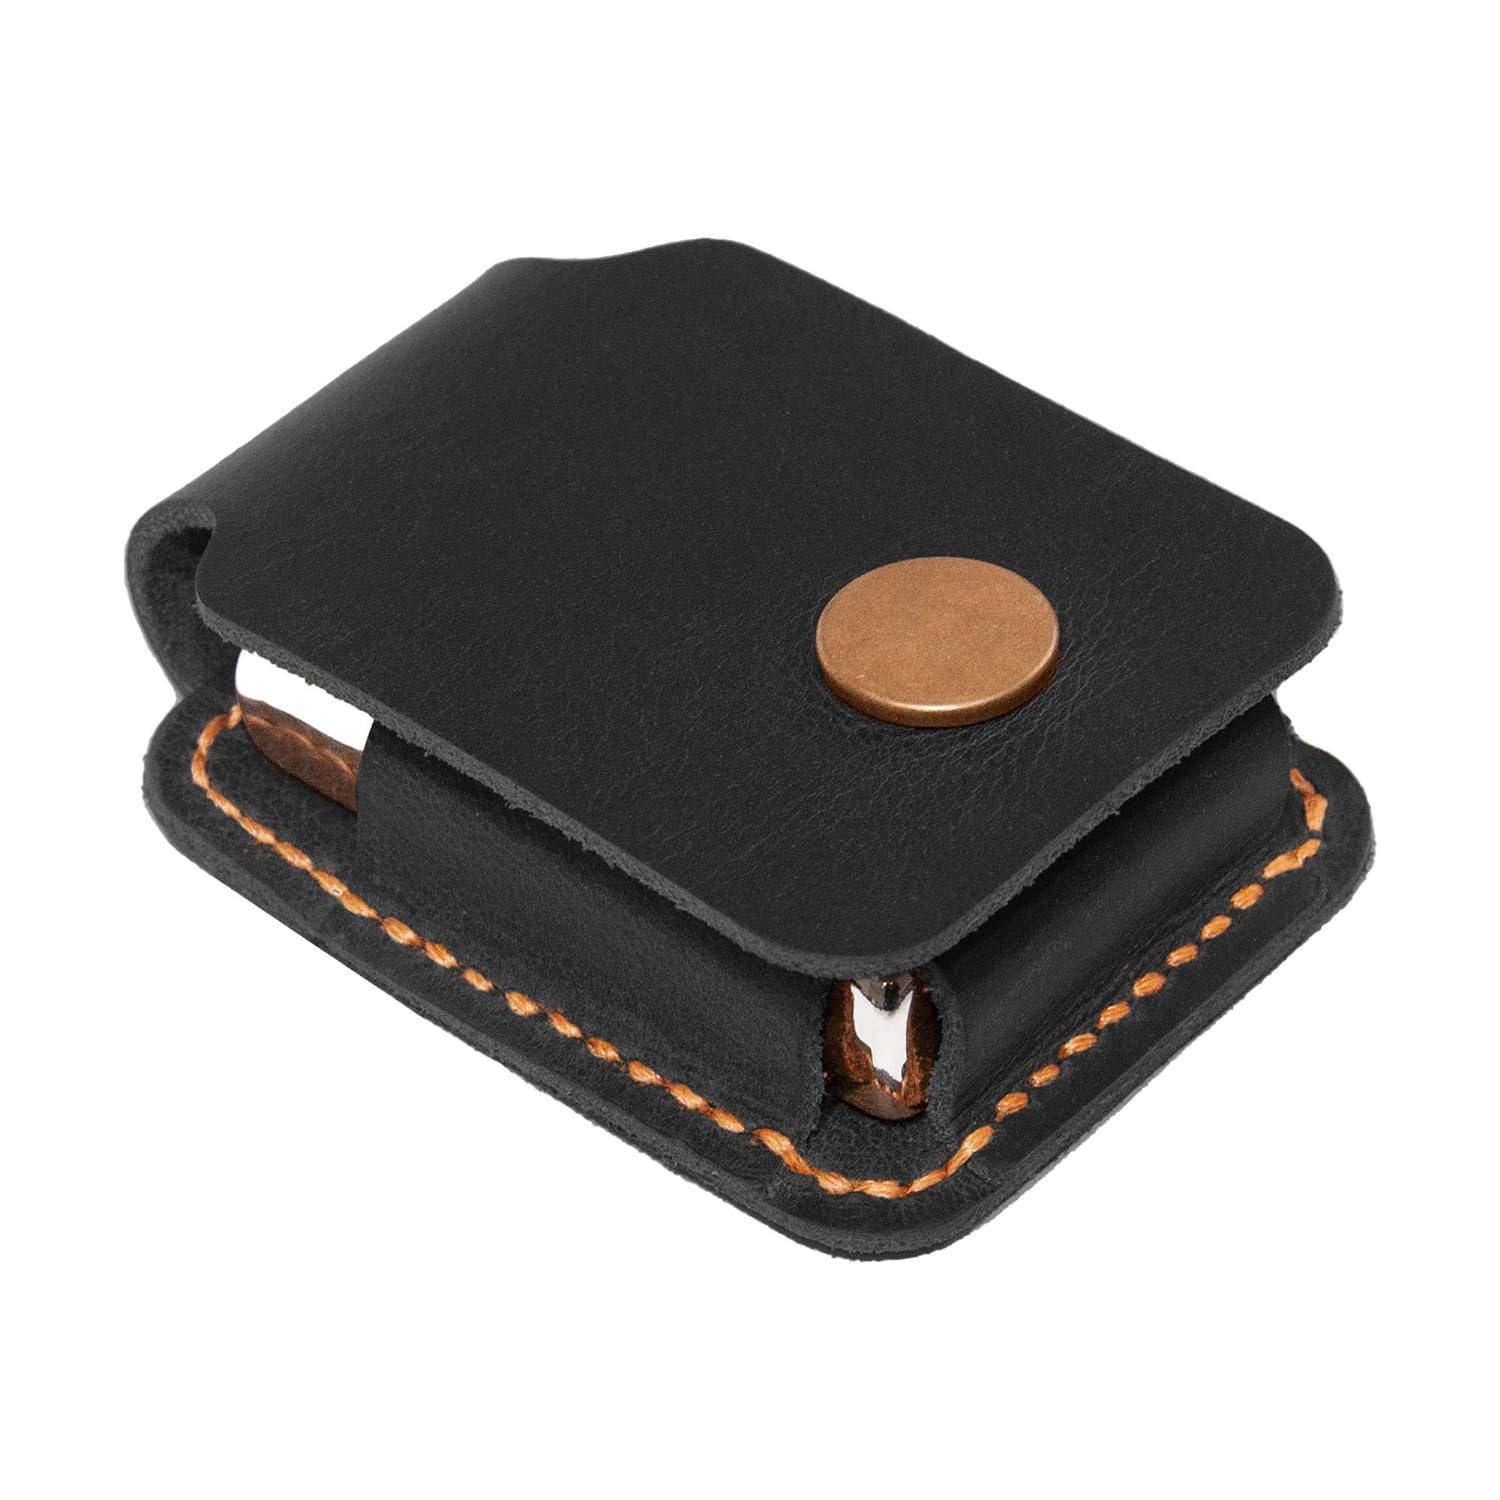 Personalized Leather Lighter Case, Handmade Leather Lighter Case for Men, for Leather Zippo Cover, Engraved Leather Lighter Holder Belt Case, Birthday Gift for Him or Her